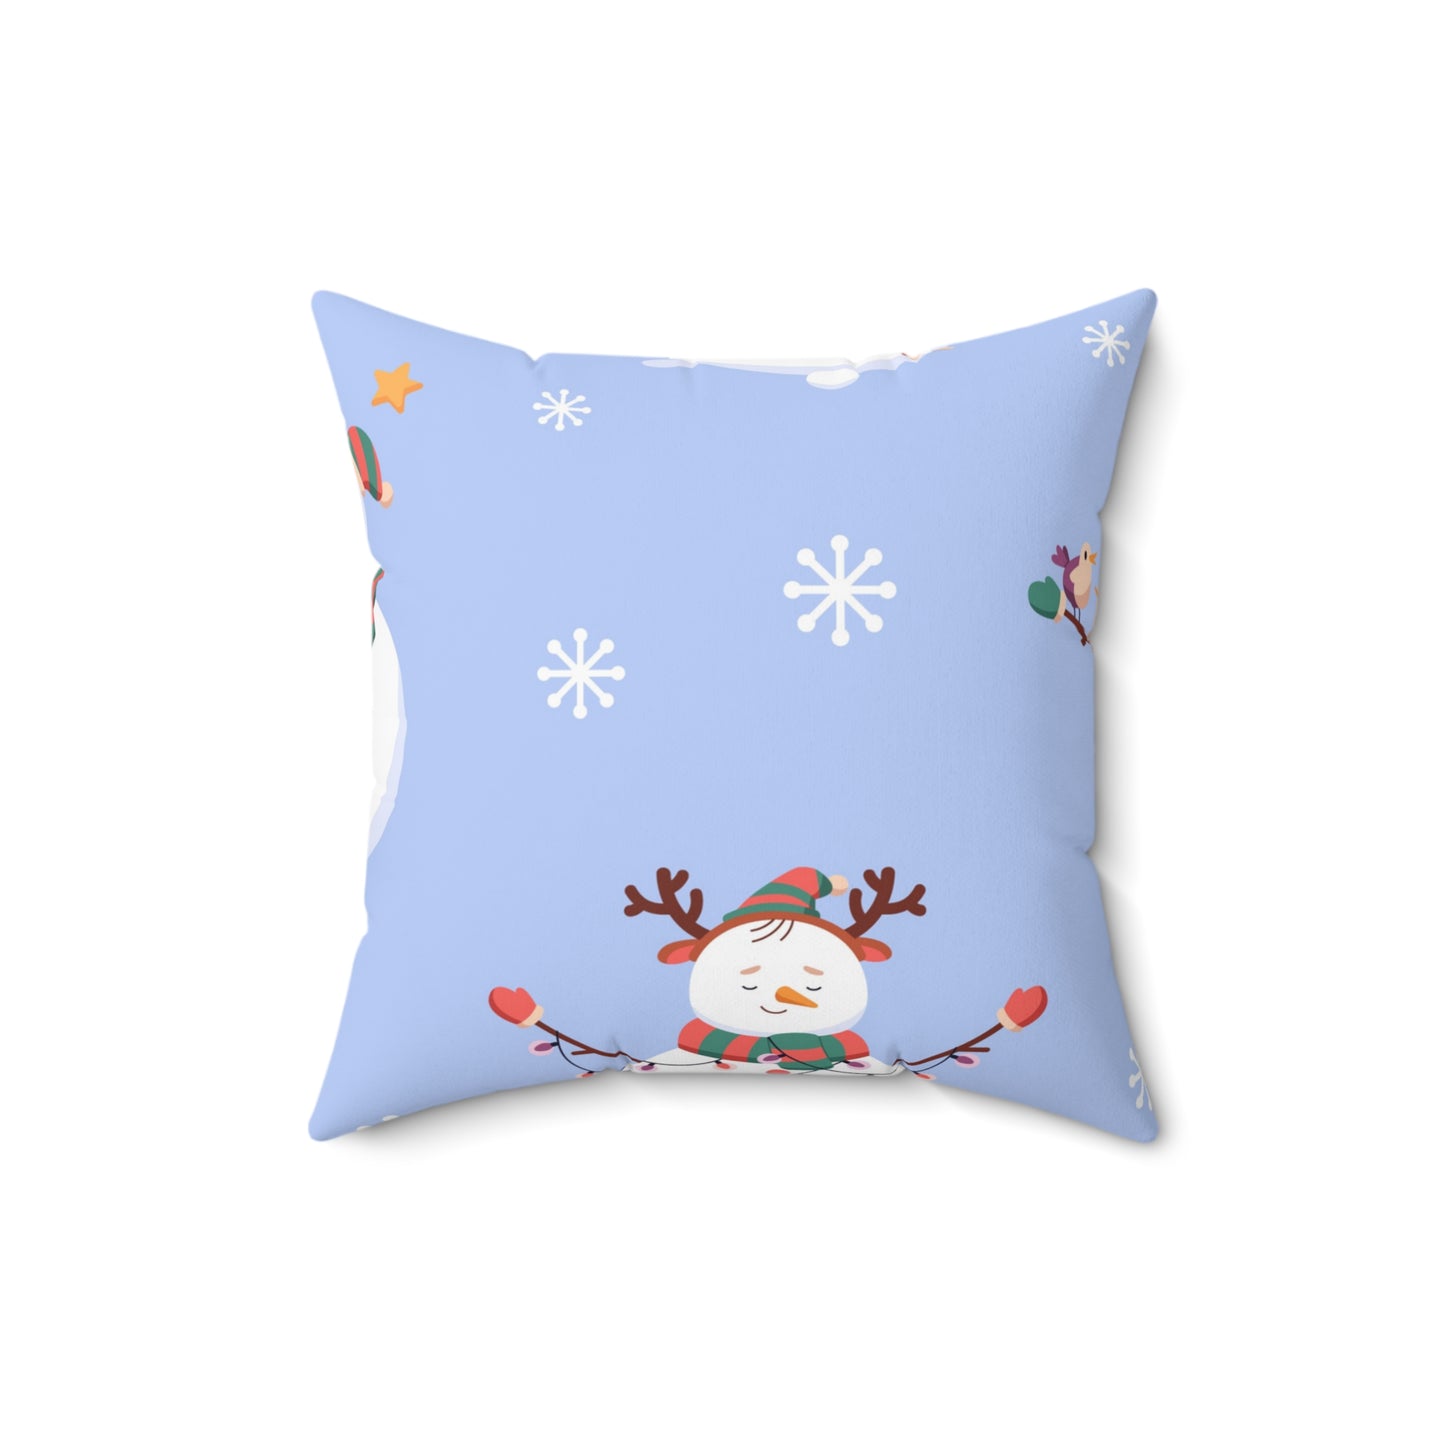 Jolly Snowman Square Pillow